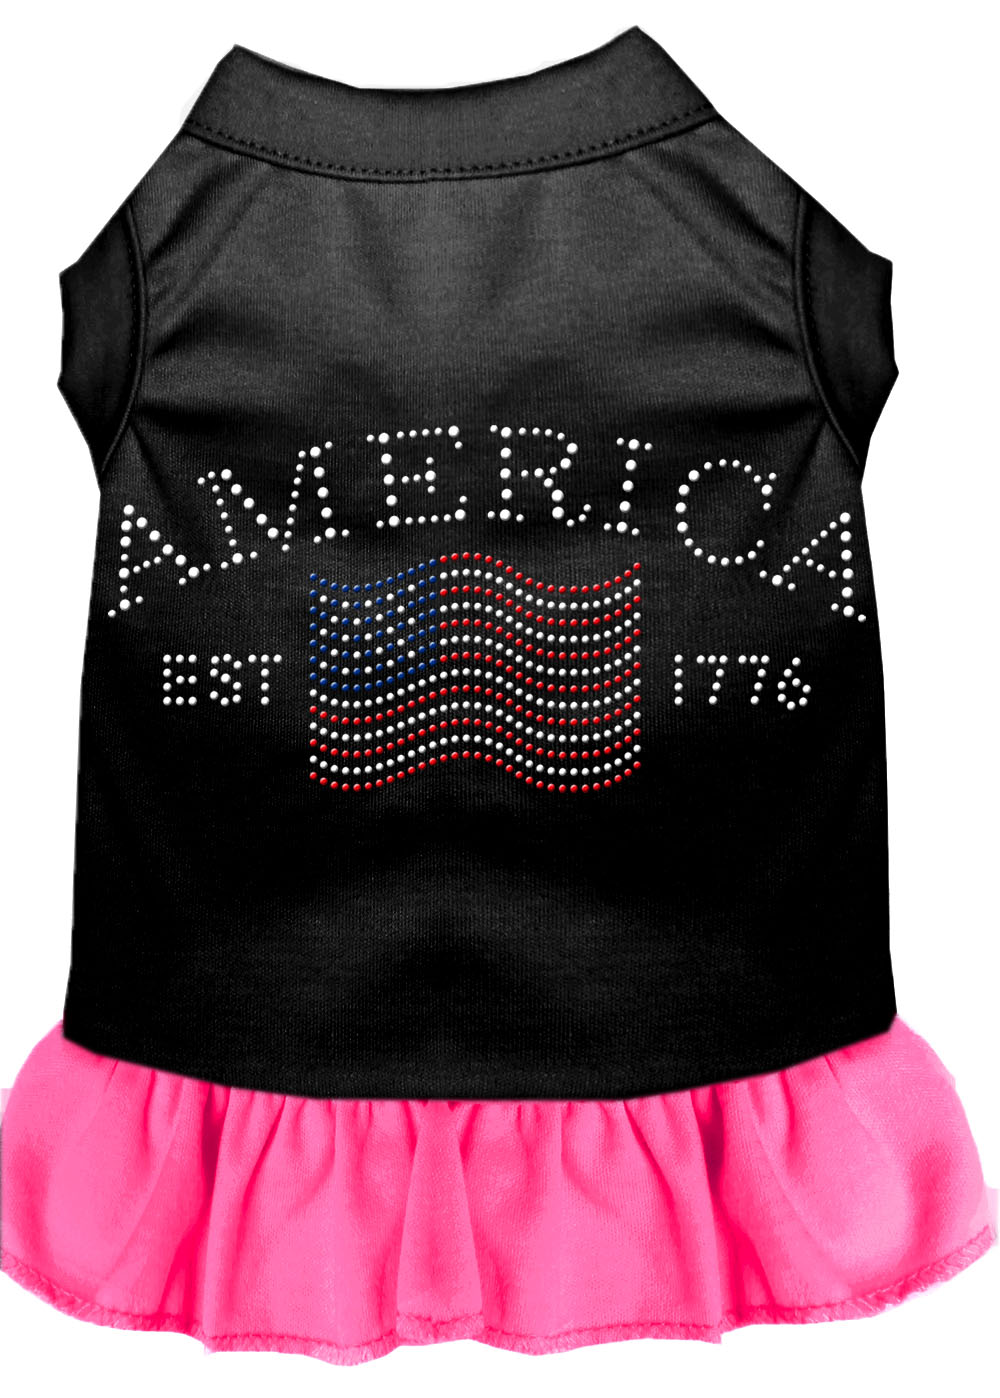 Classic America Rhinestone Dress Black with Bright Pink XS